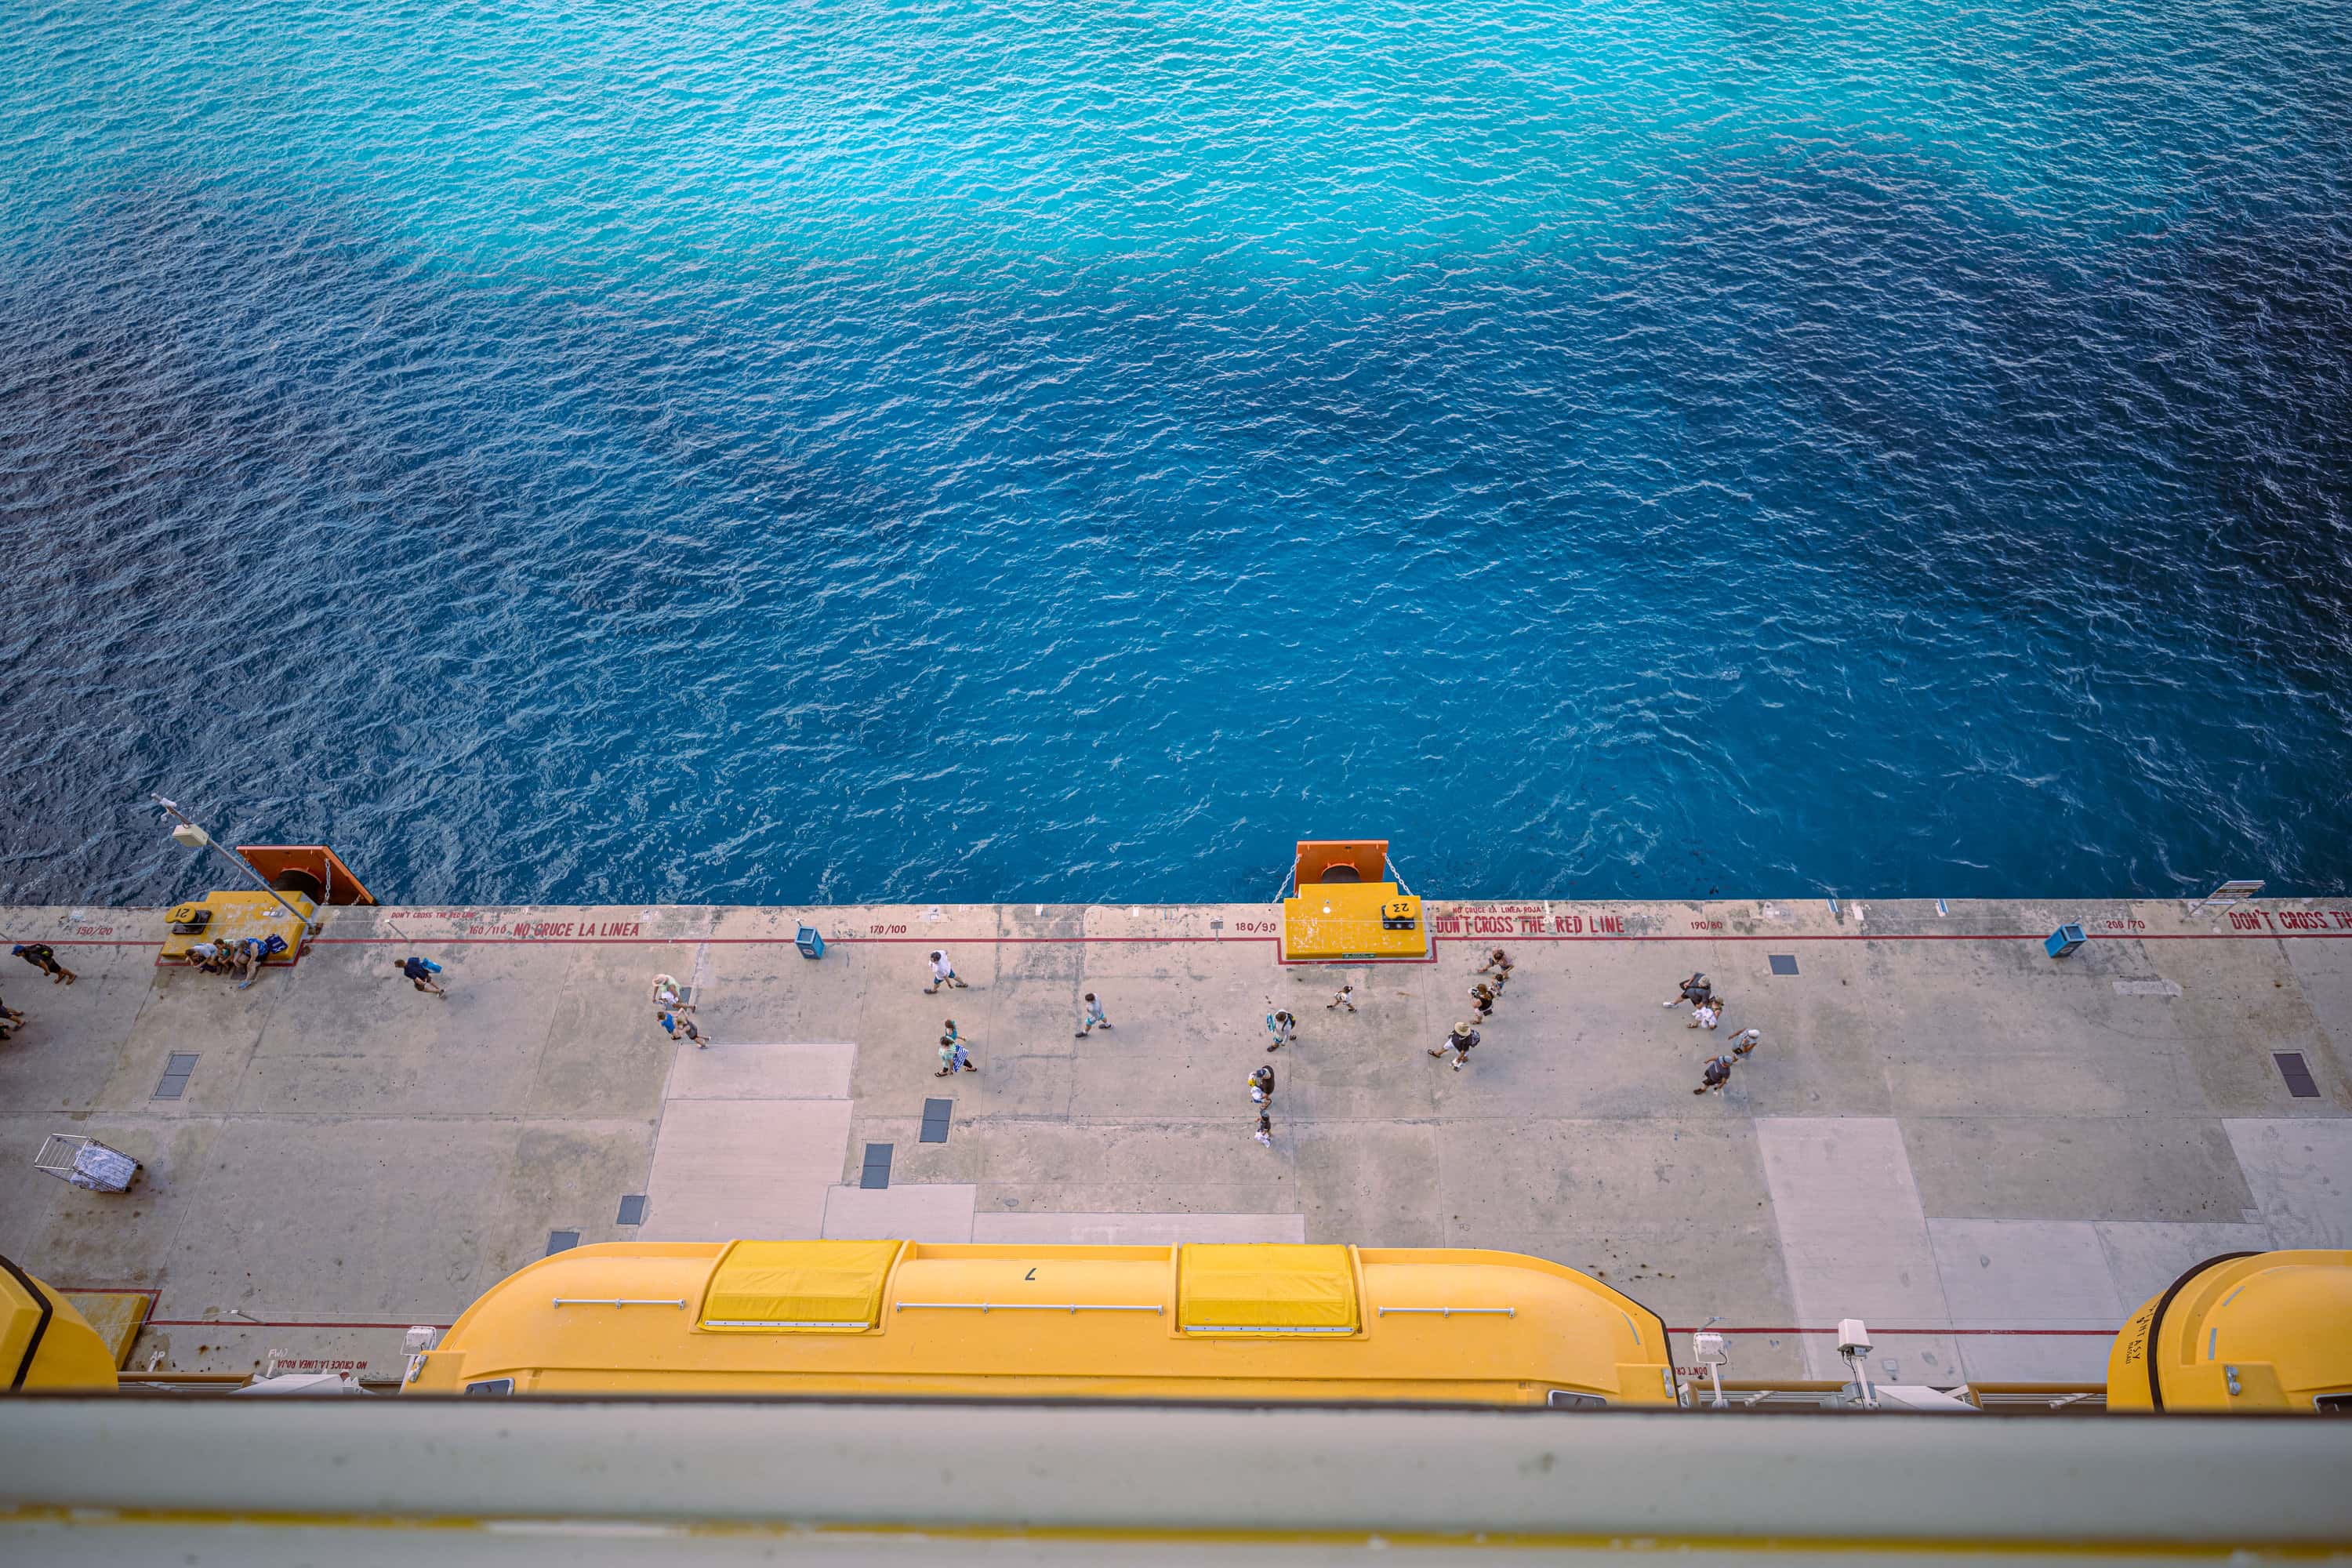 Dock at Cozumel from the Perspective of Disney Fantasy Cruise Verandah